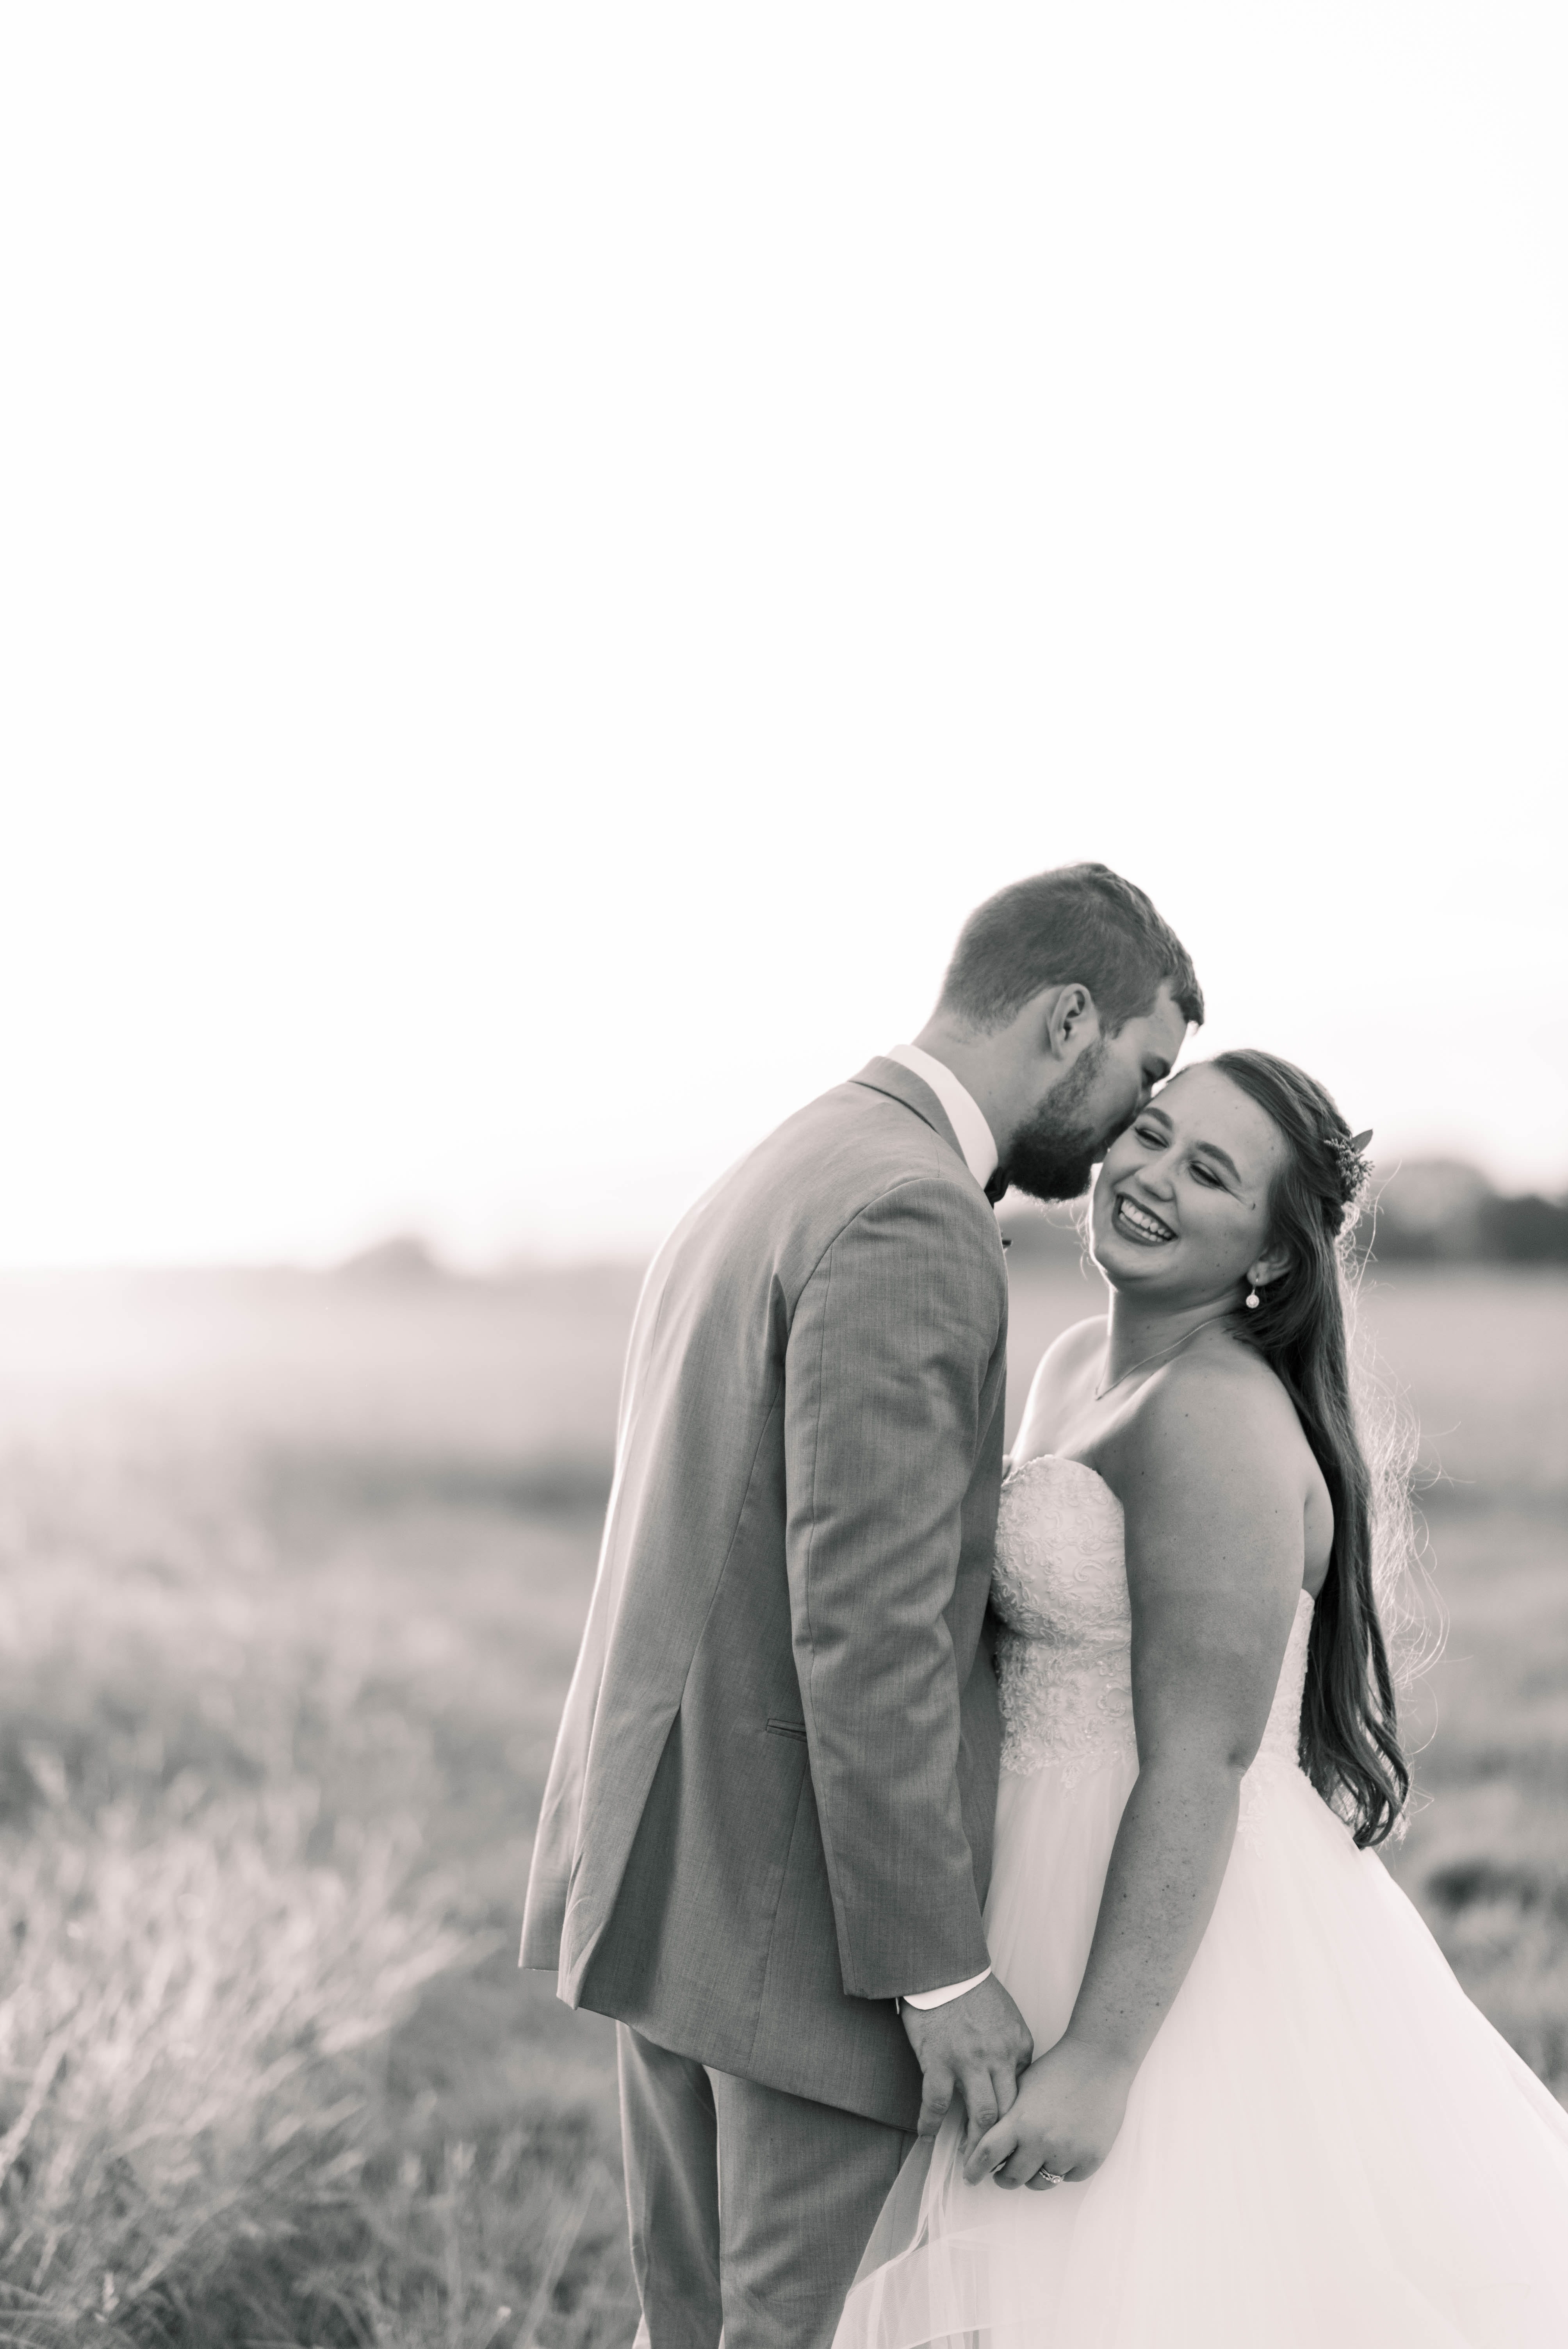 Megan and Tim: Fall Wedding At Crago Farms in Marysville, Ohio